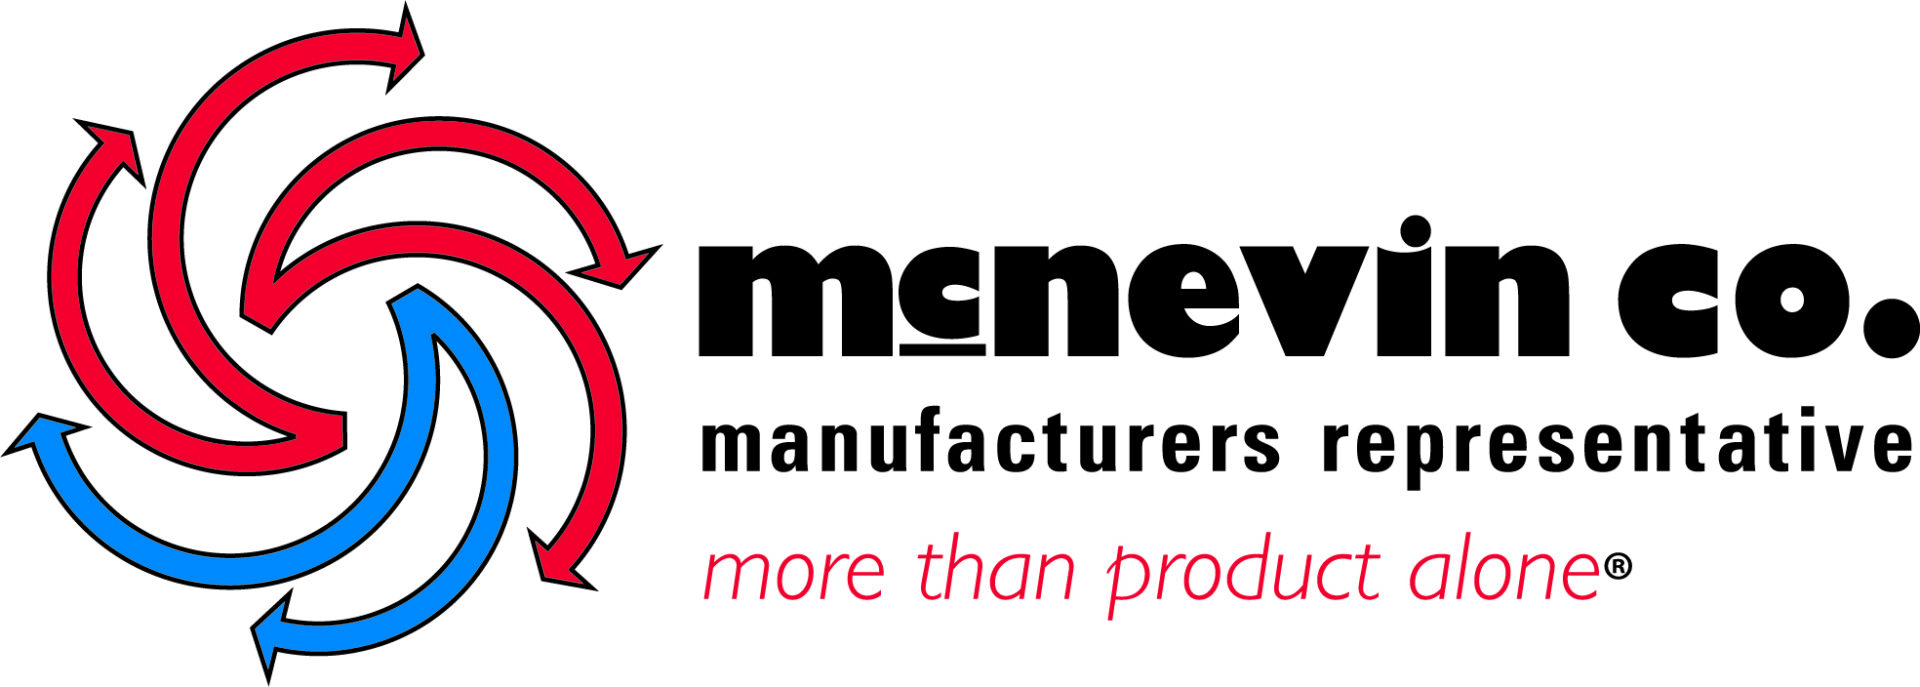 McNevin Company